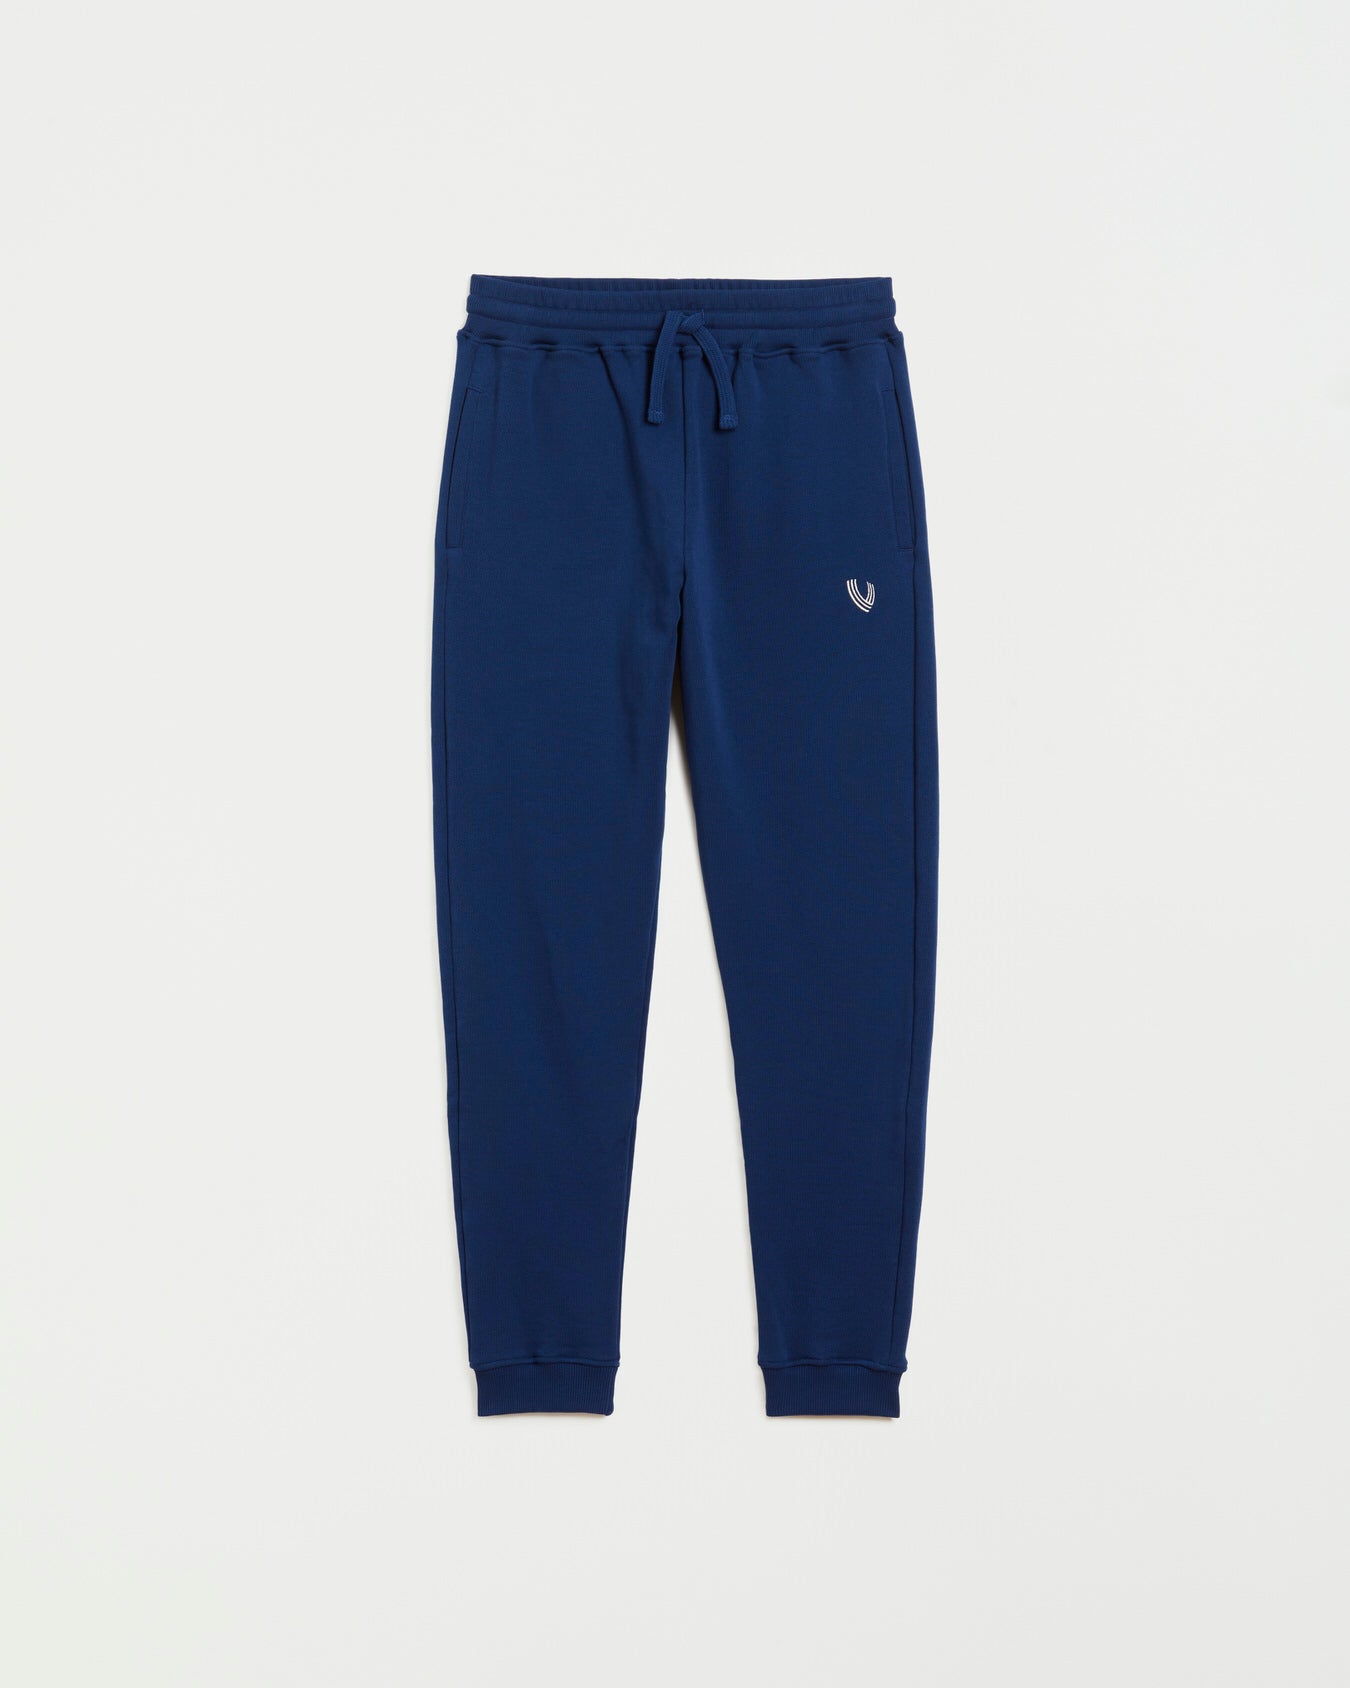 Lifestyle Sweatpants Blue Navy